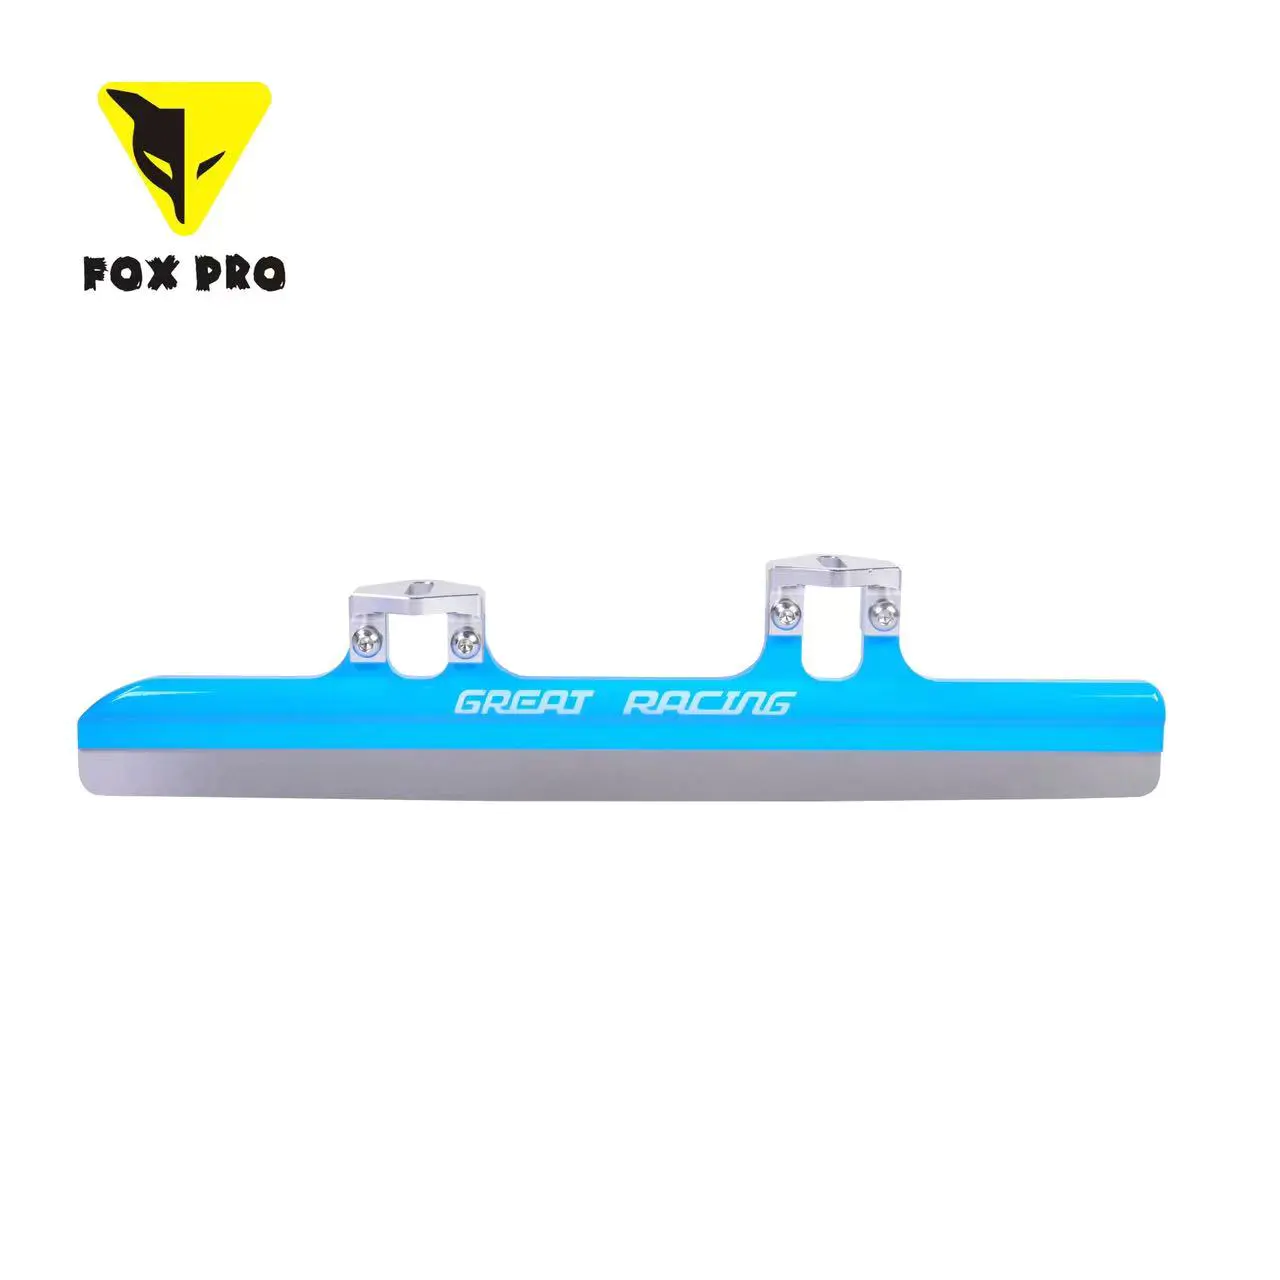 FOX PRO 60 HRC Short Track Ice Skate Blades CNC Aluminum 7005 Ice Skate Blades For MEN&Women Indoor/Outdoor Sports